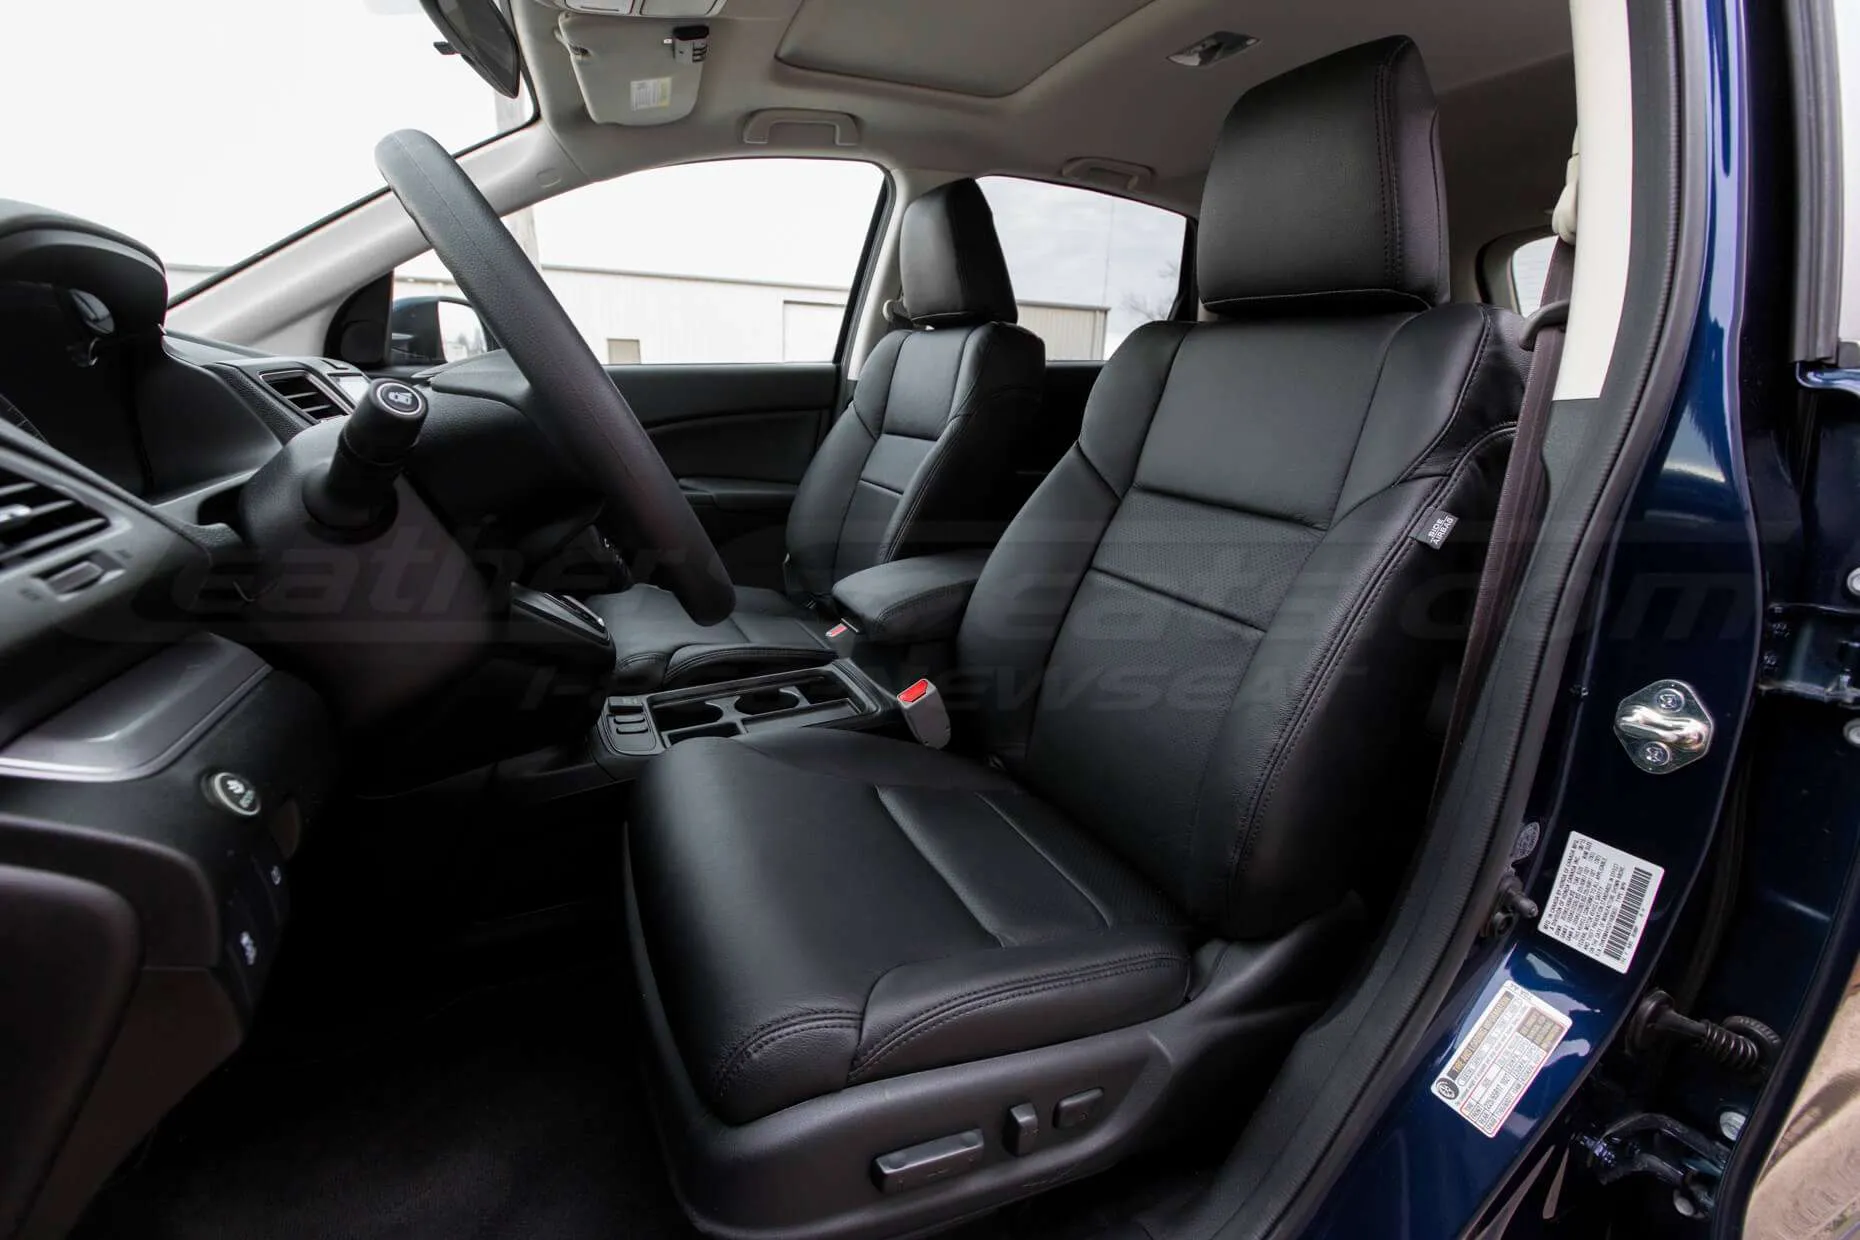 Honda CRV Leather Seat Kit - Black - Installed - Front drivers seat